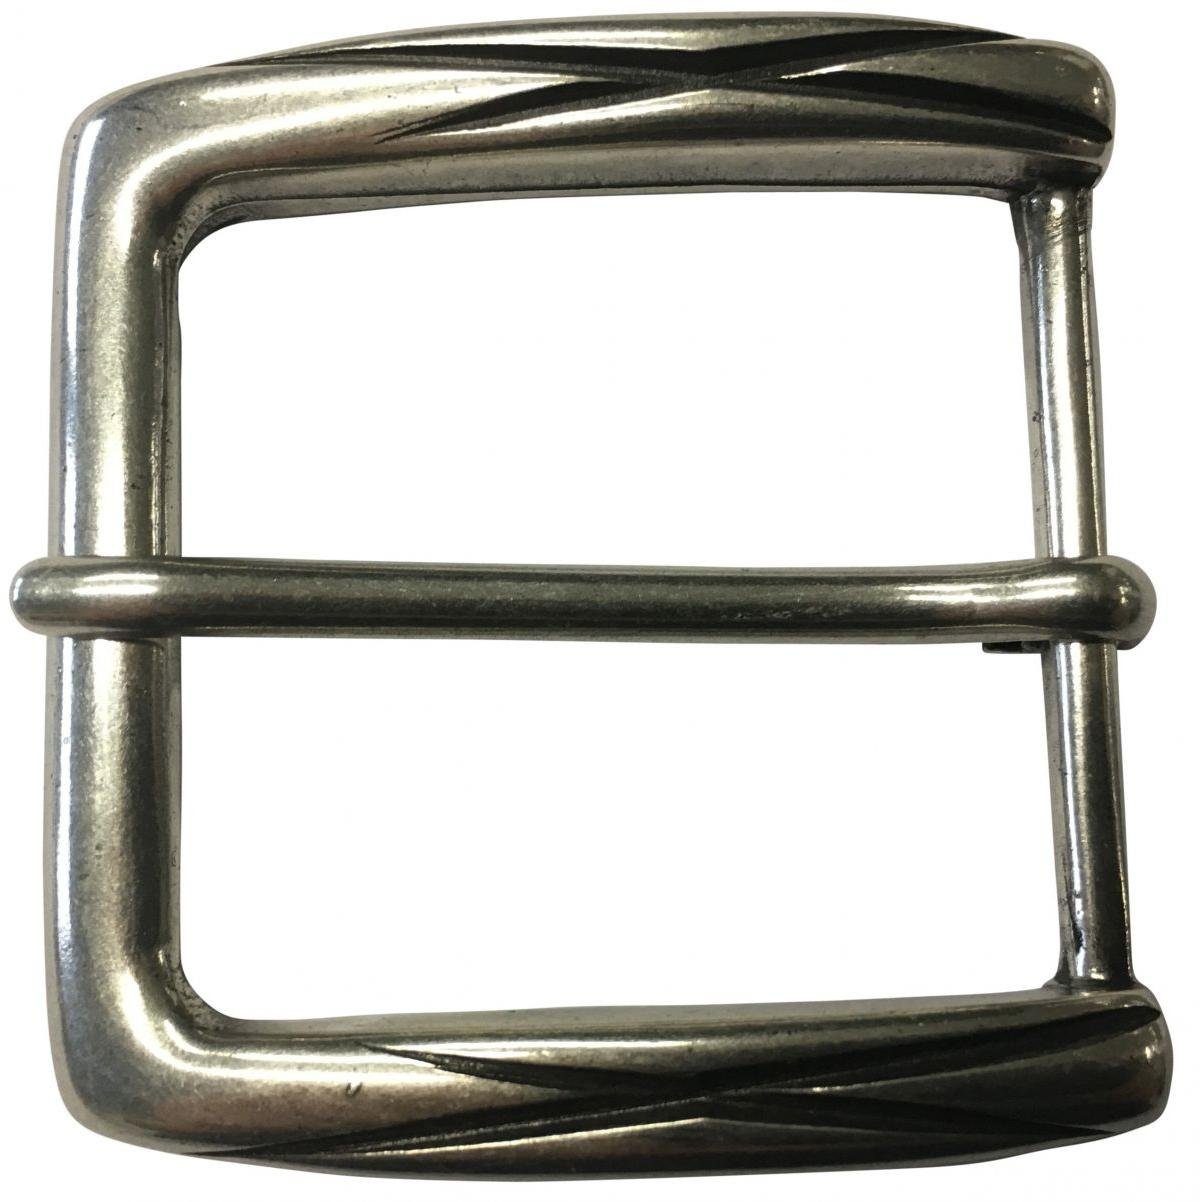 BELTINGER Gürtelschnalle Check 4,0 cm - Gürtelschließe 40mm - Dorn-Schließe - Gürtel bis 4cm